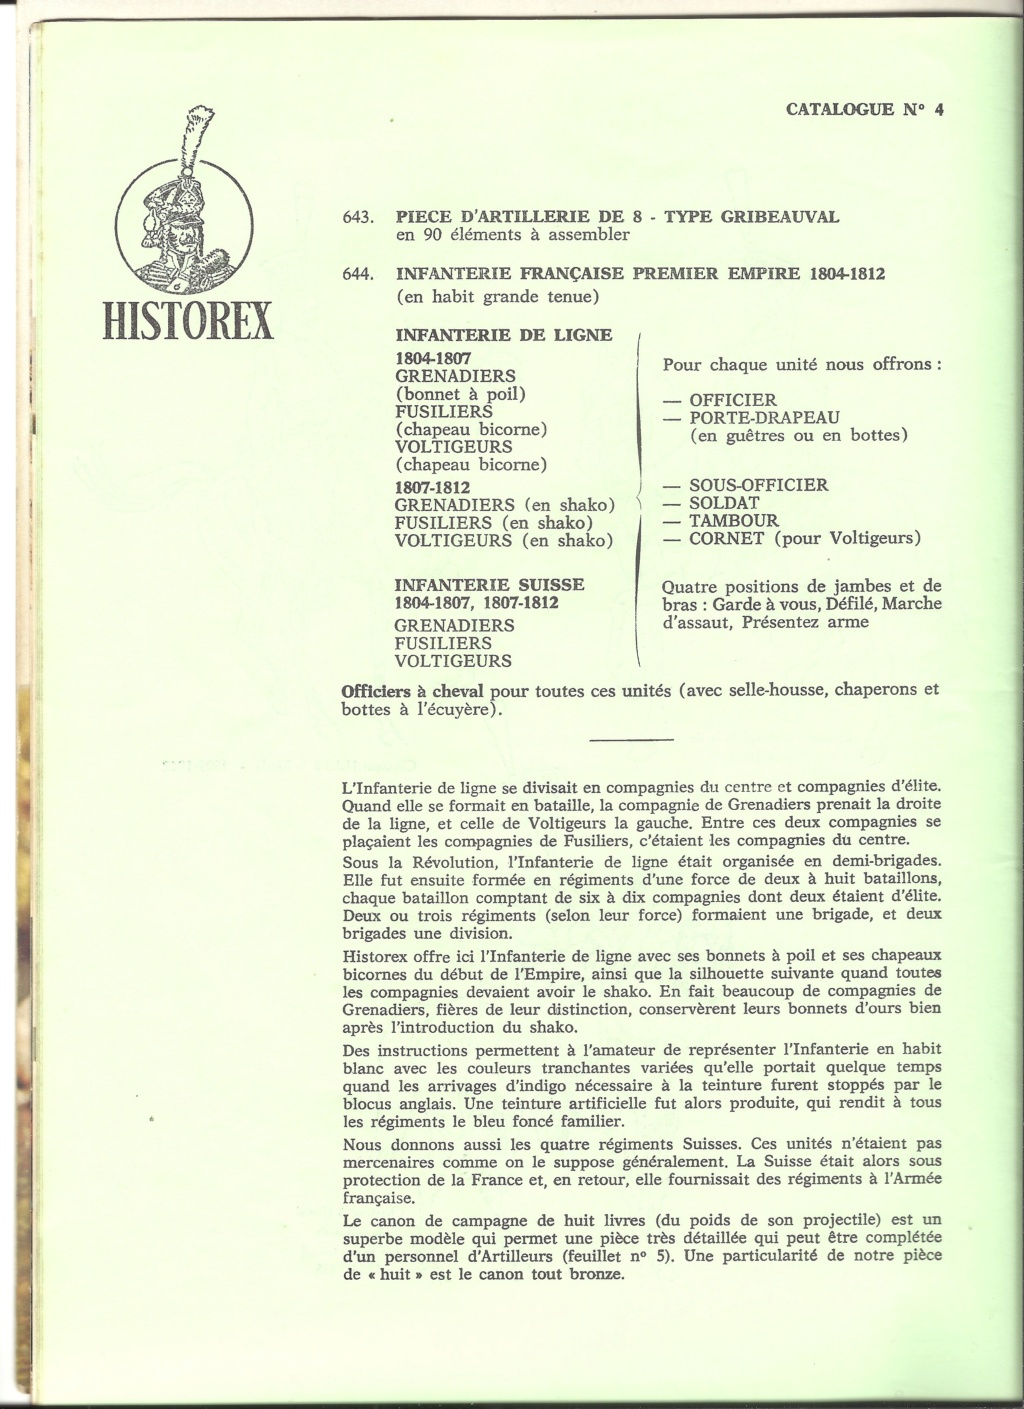 [HISTOREX 1976] Catalogue 1976  Histor25